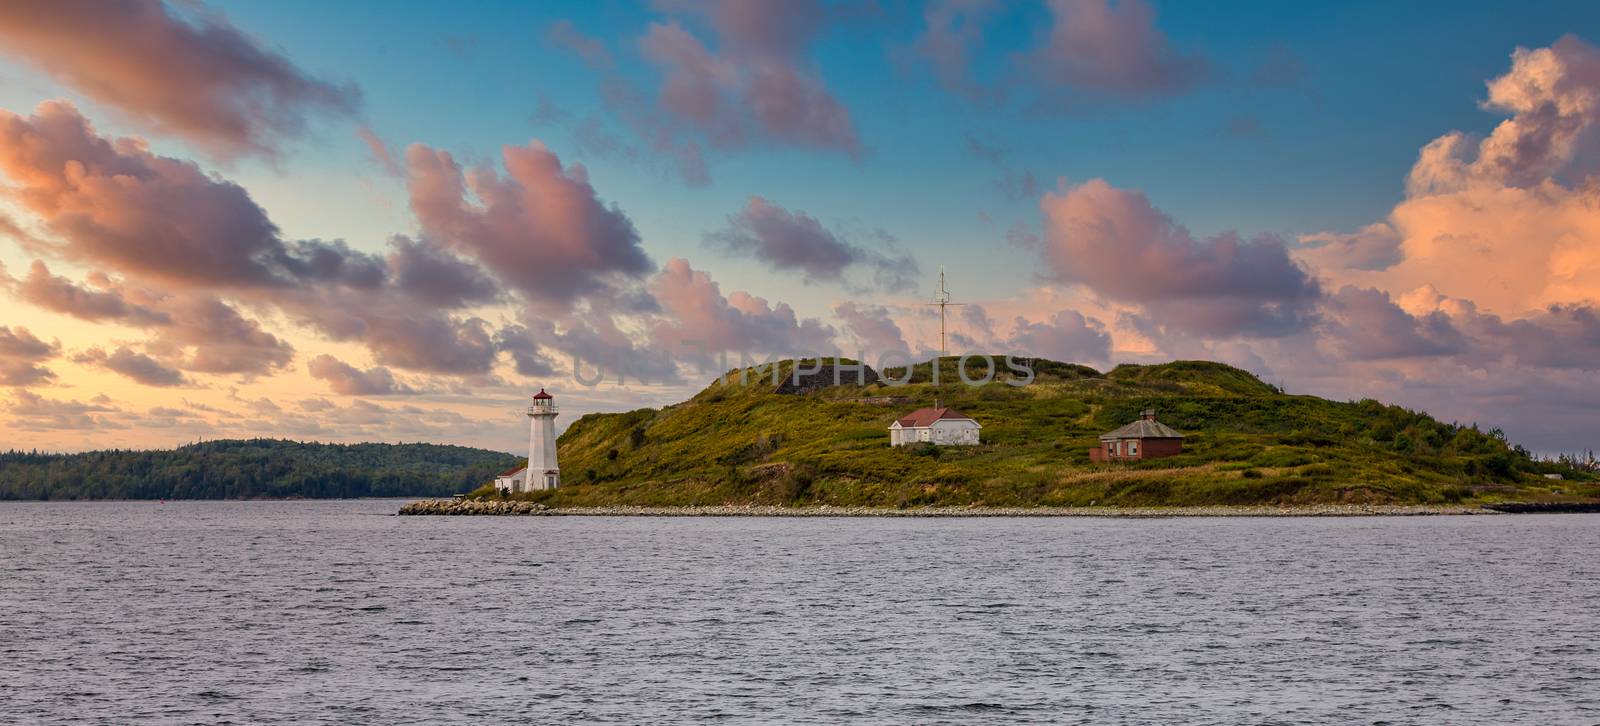 Lighthouse on Island in Halifax by dbvirago